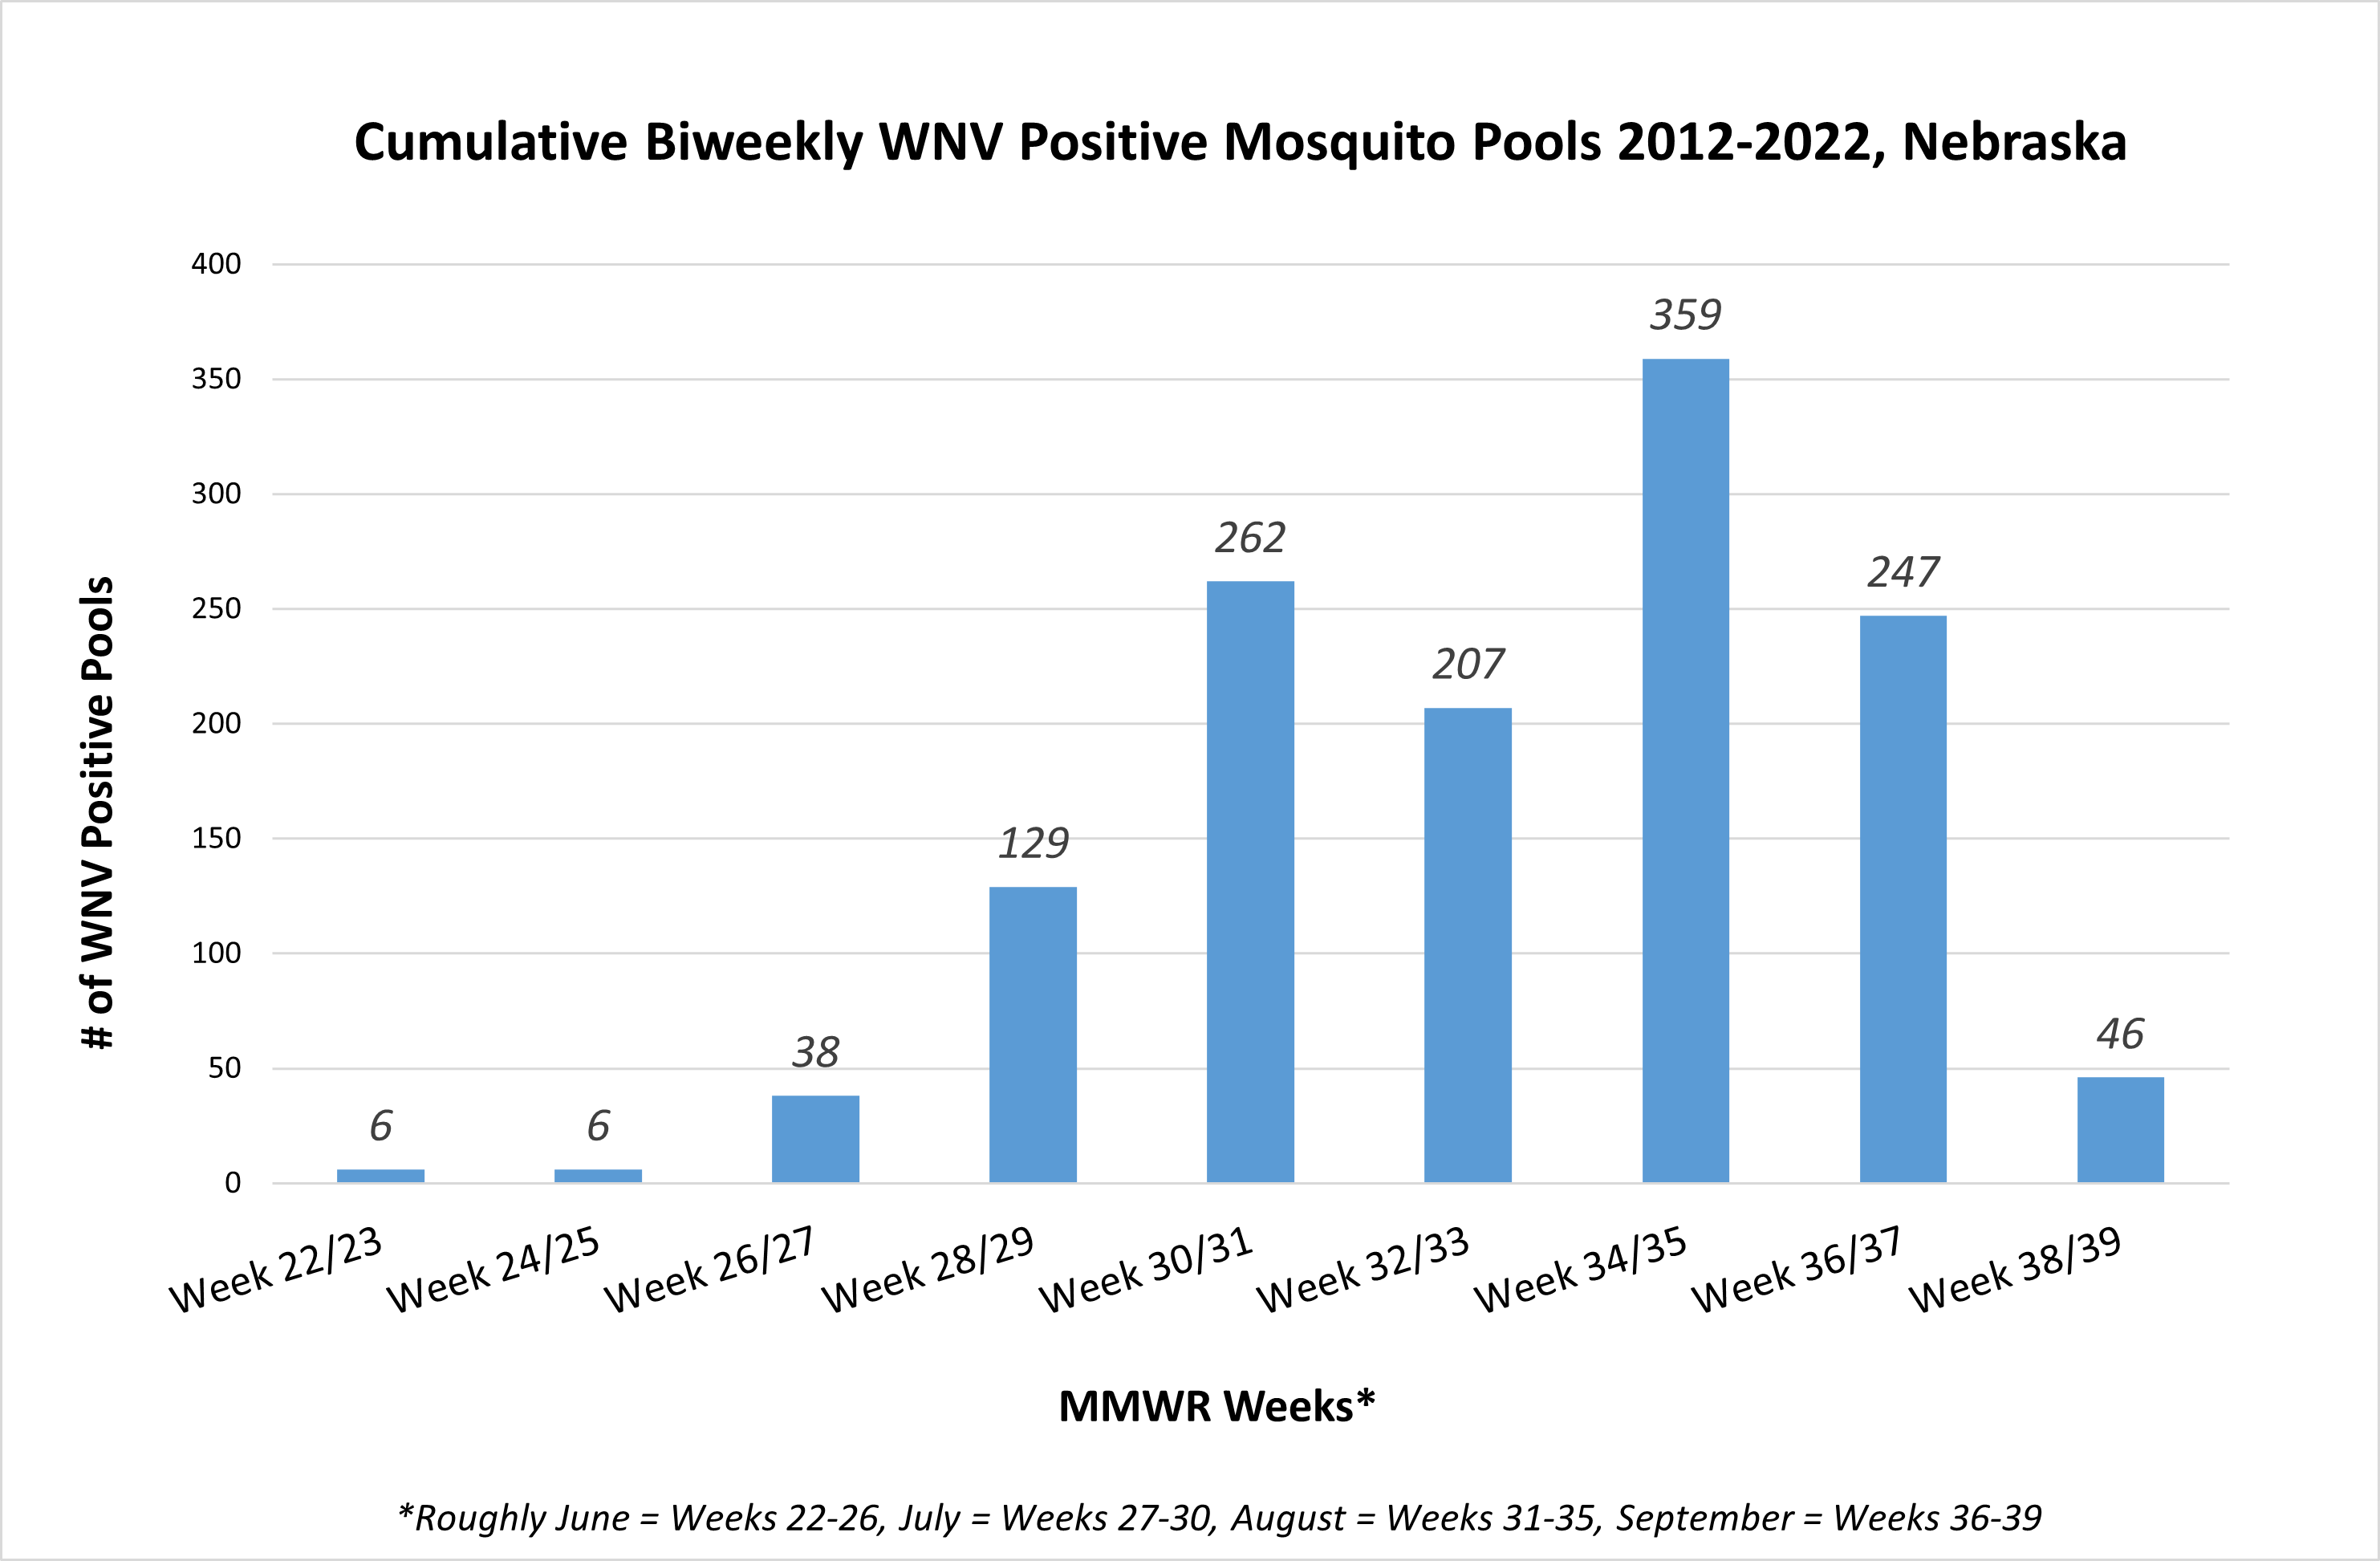 West Nile Virus Positive Mosquito Pools Nebraska, 2022